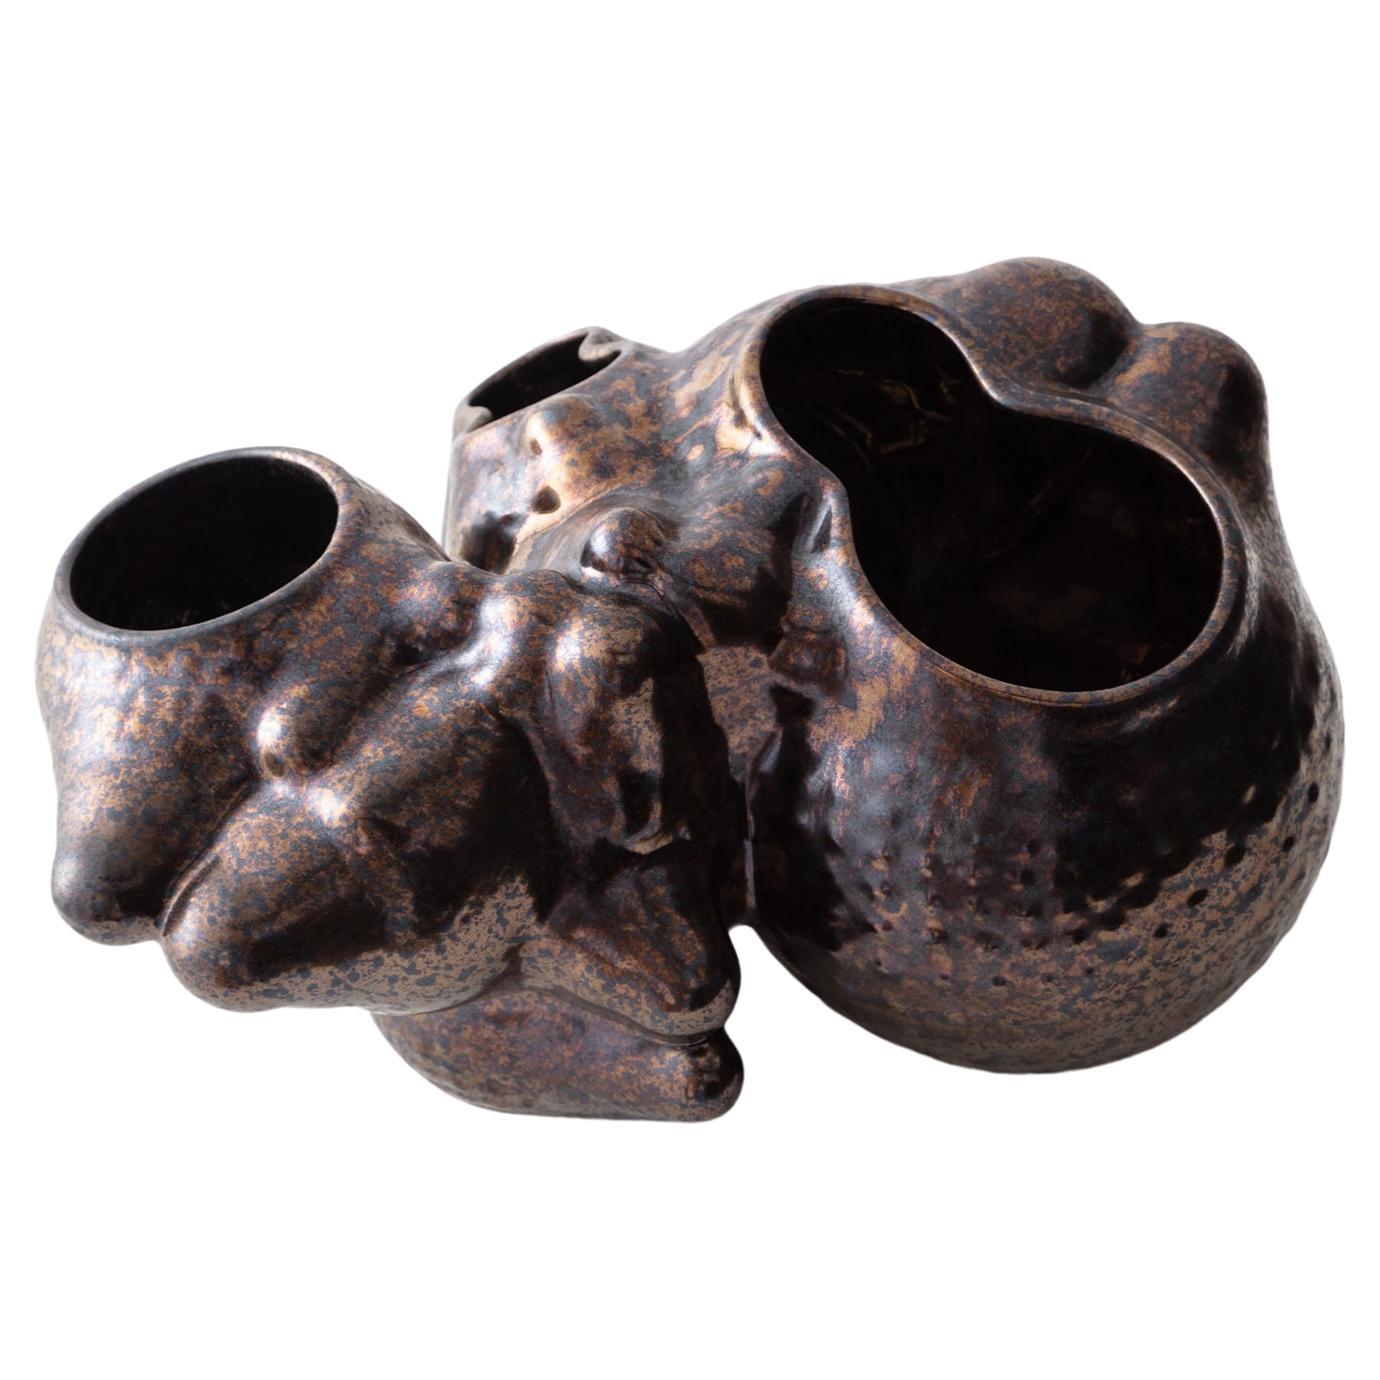 Organic Modern Ceramic Botryoidal Bubbly Planter in Bronze by Forma Rosa Studio